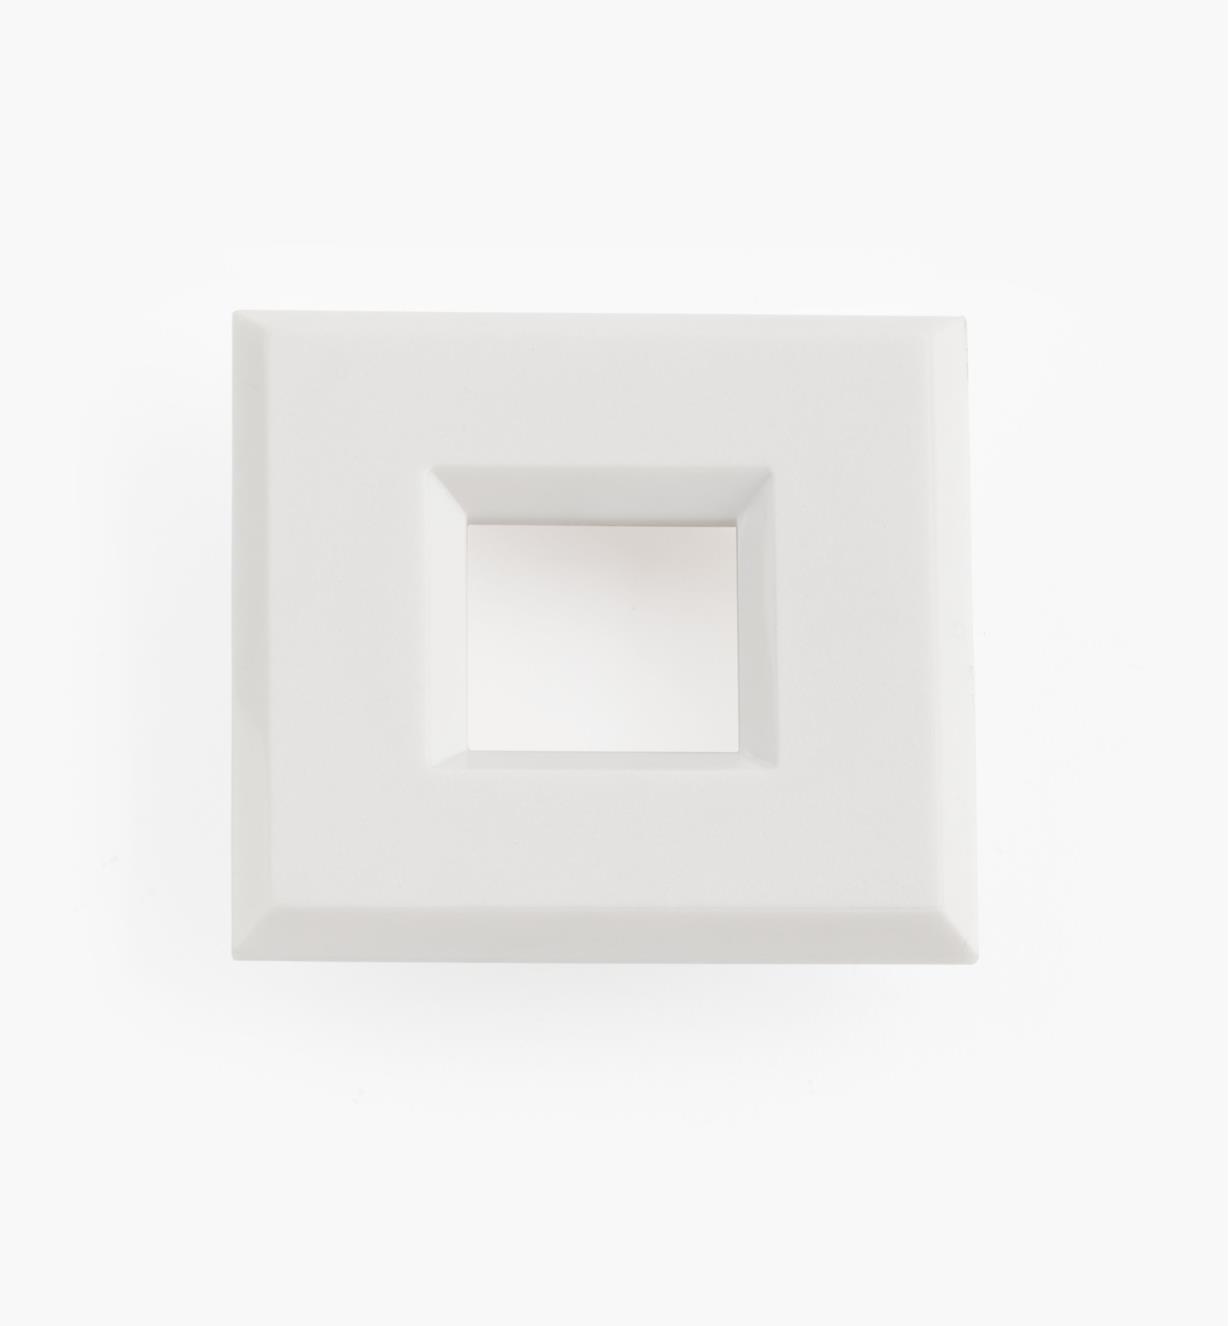 00U4365 - Garniture carrée de 1 9/16 po, polycarbonate, blanc